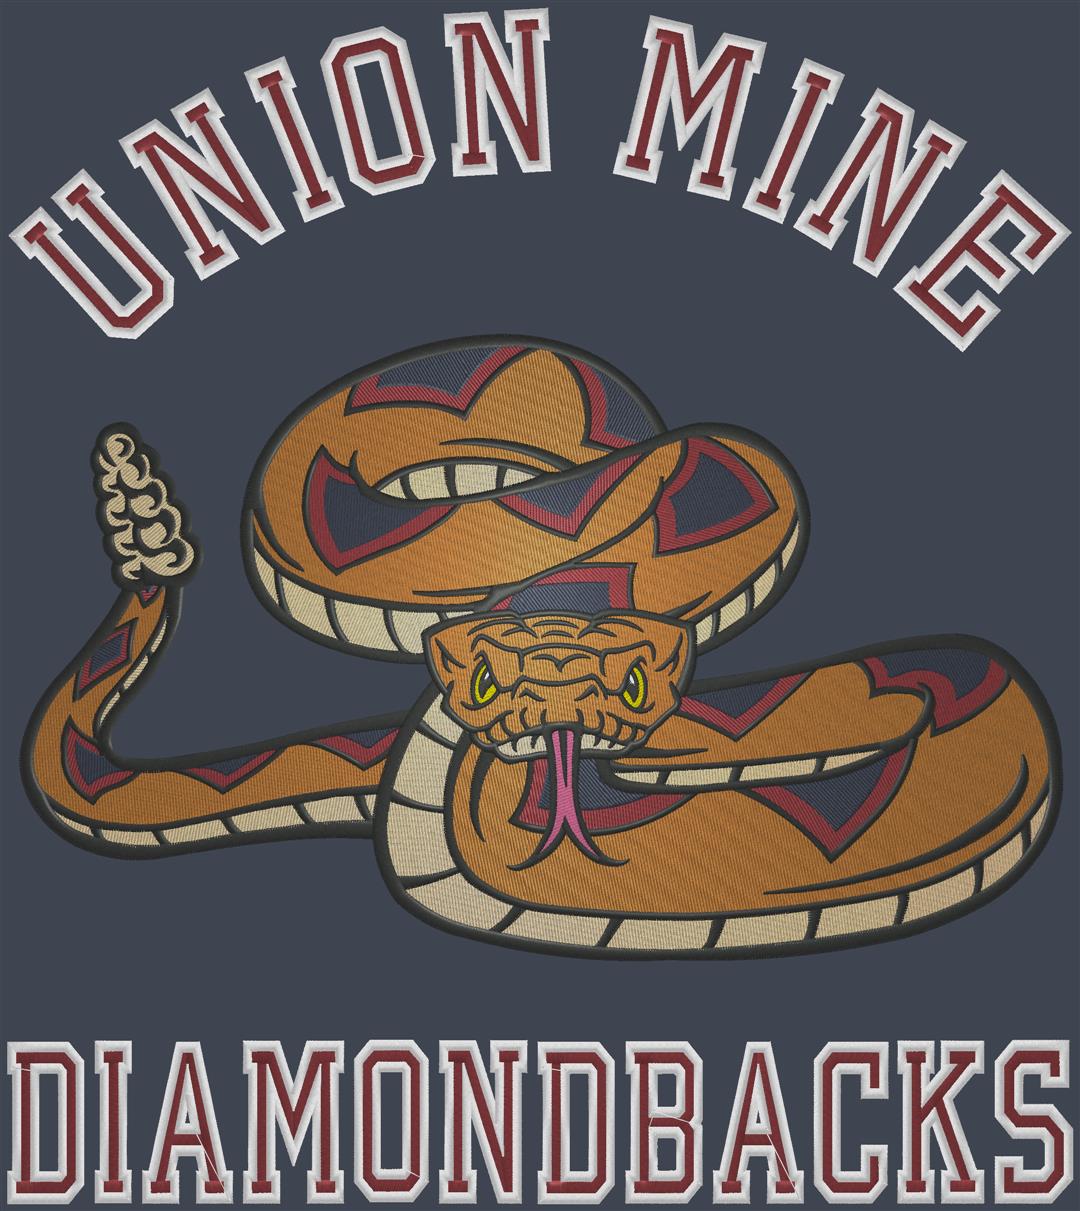 Union Mine 41